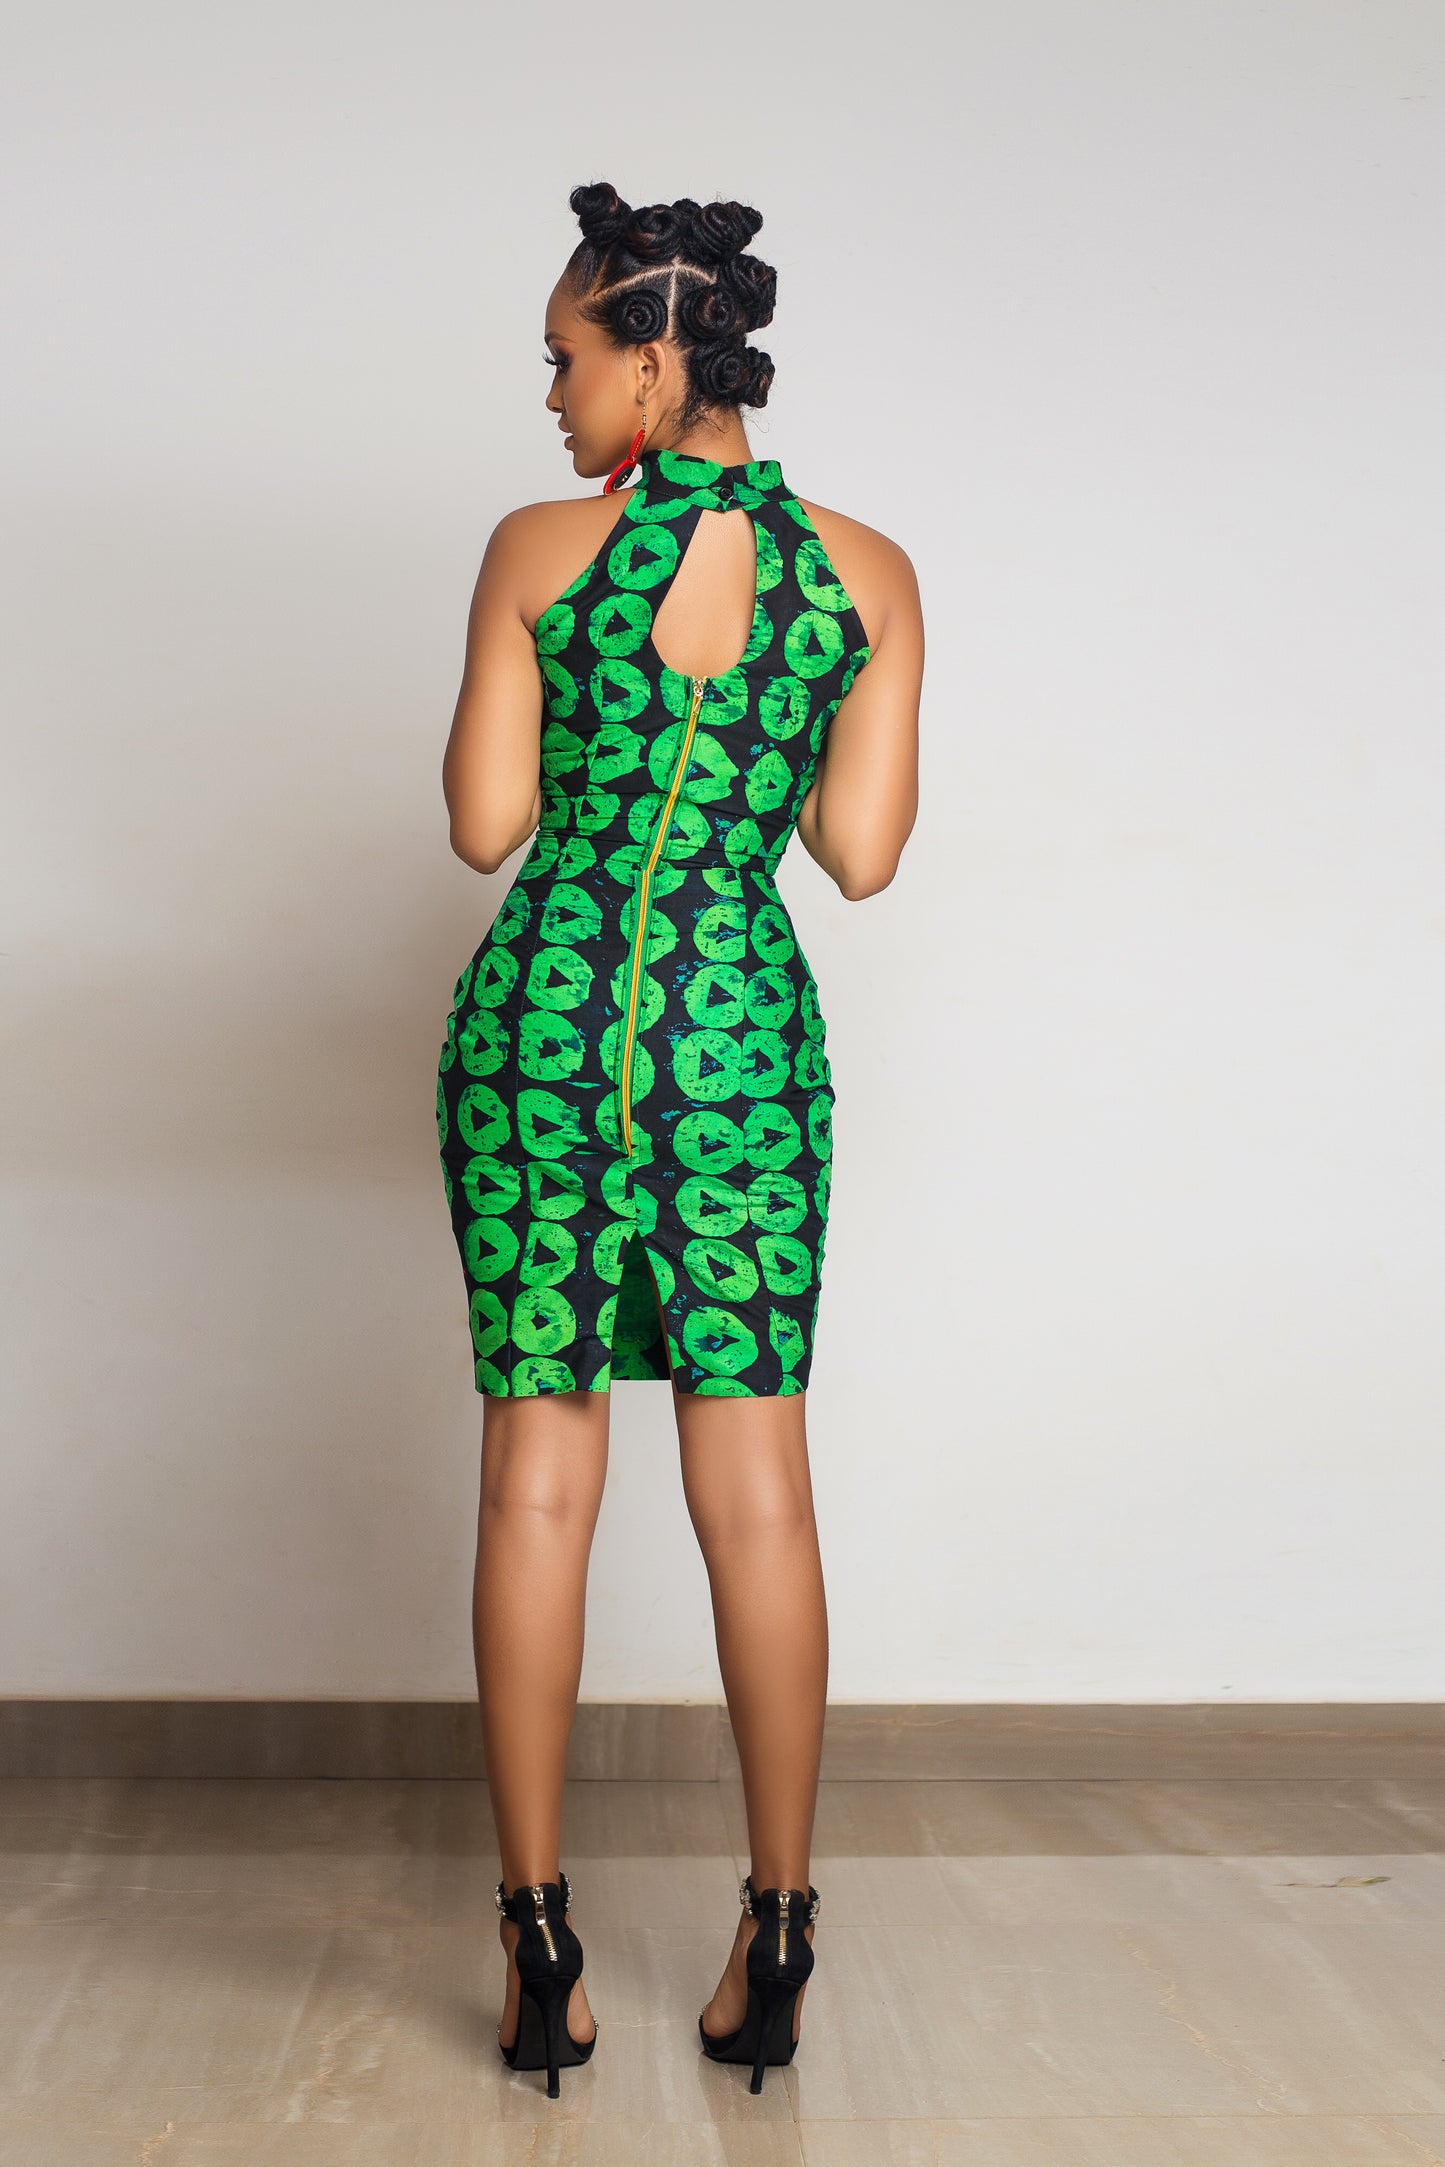 Greenlight dress - TrueFond